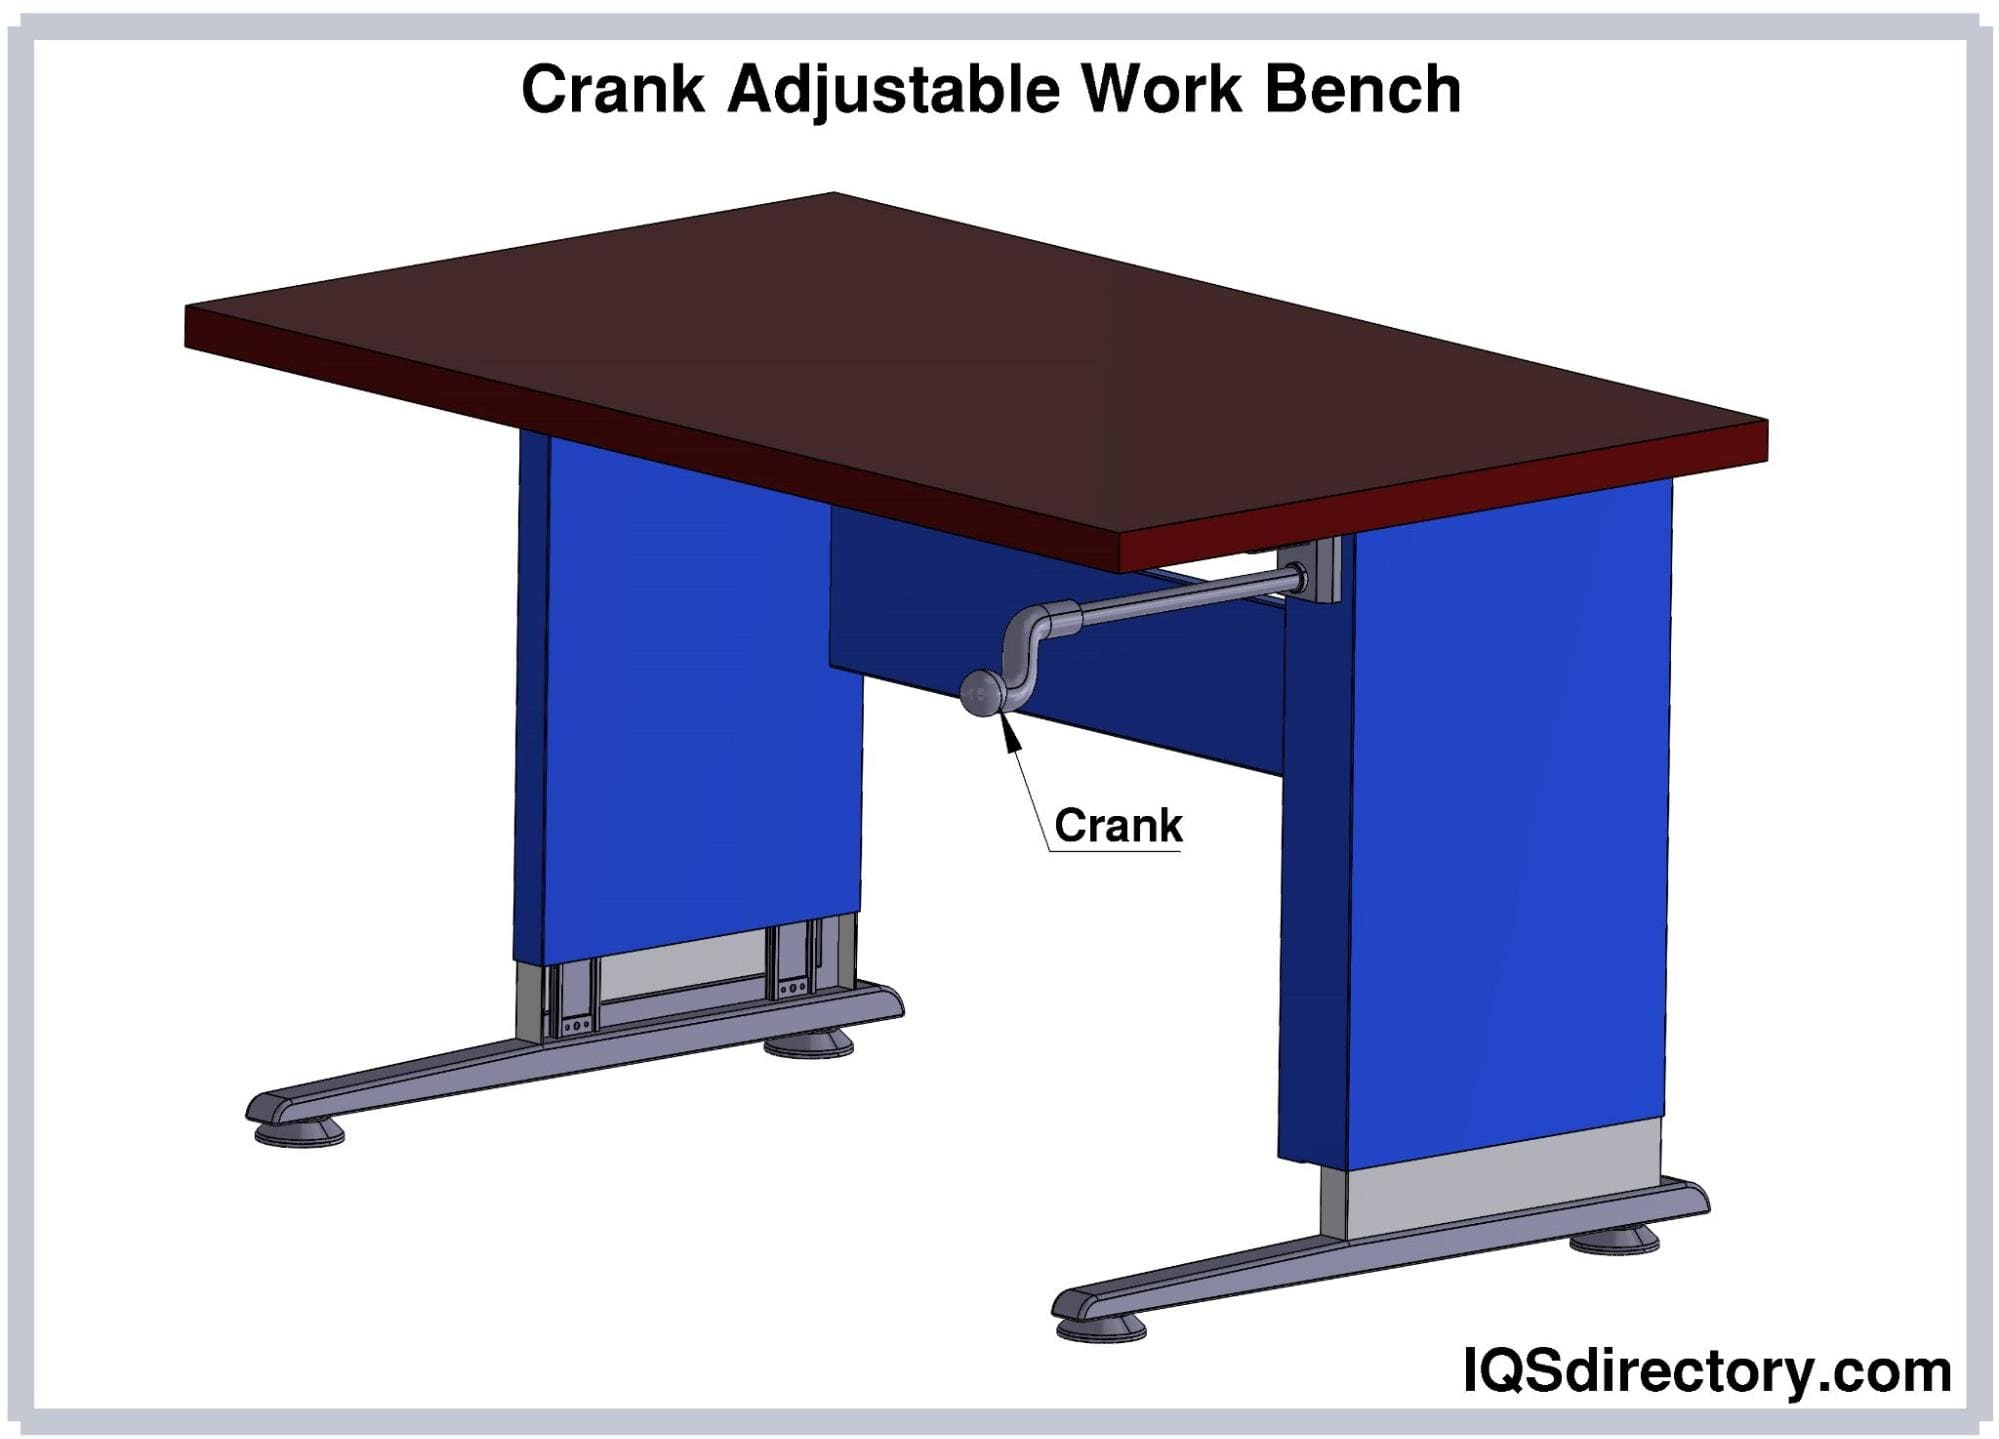 Crank Adjustable Work Bench